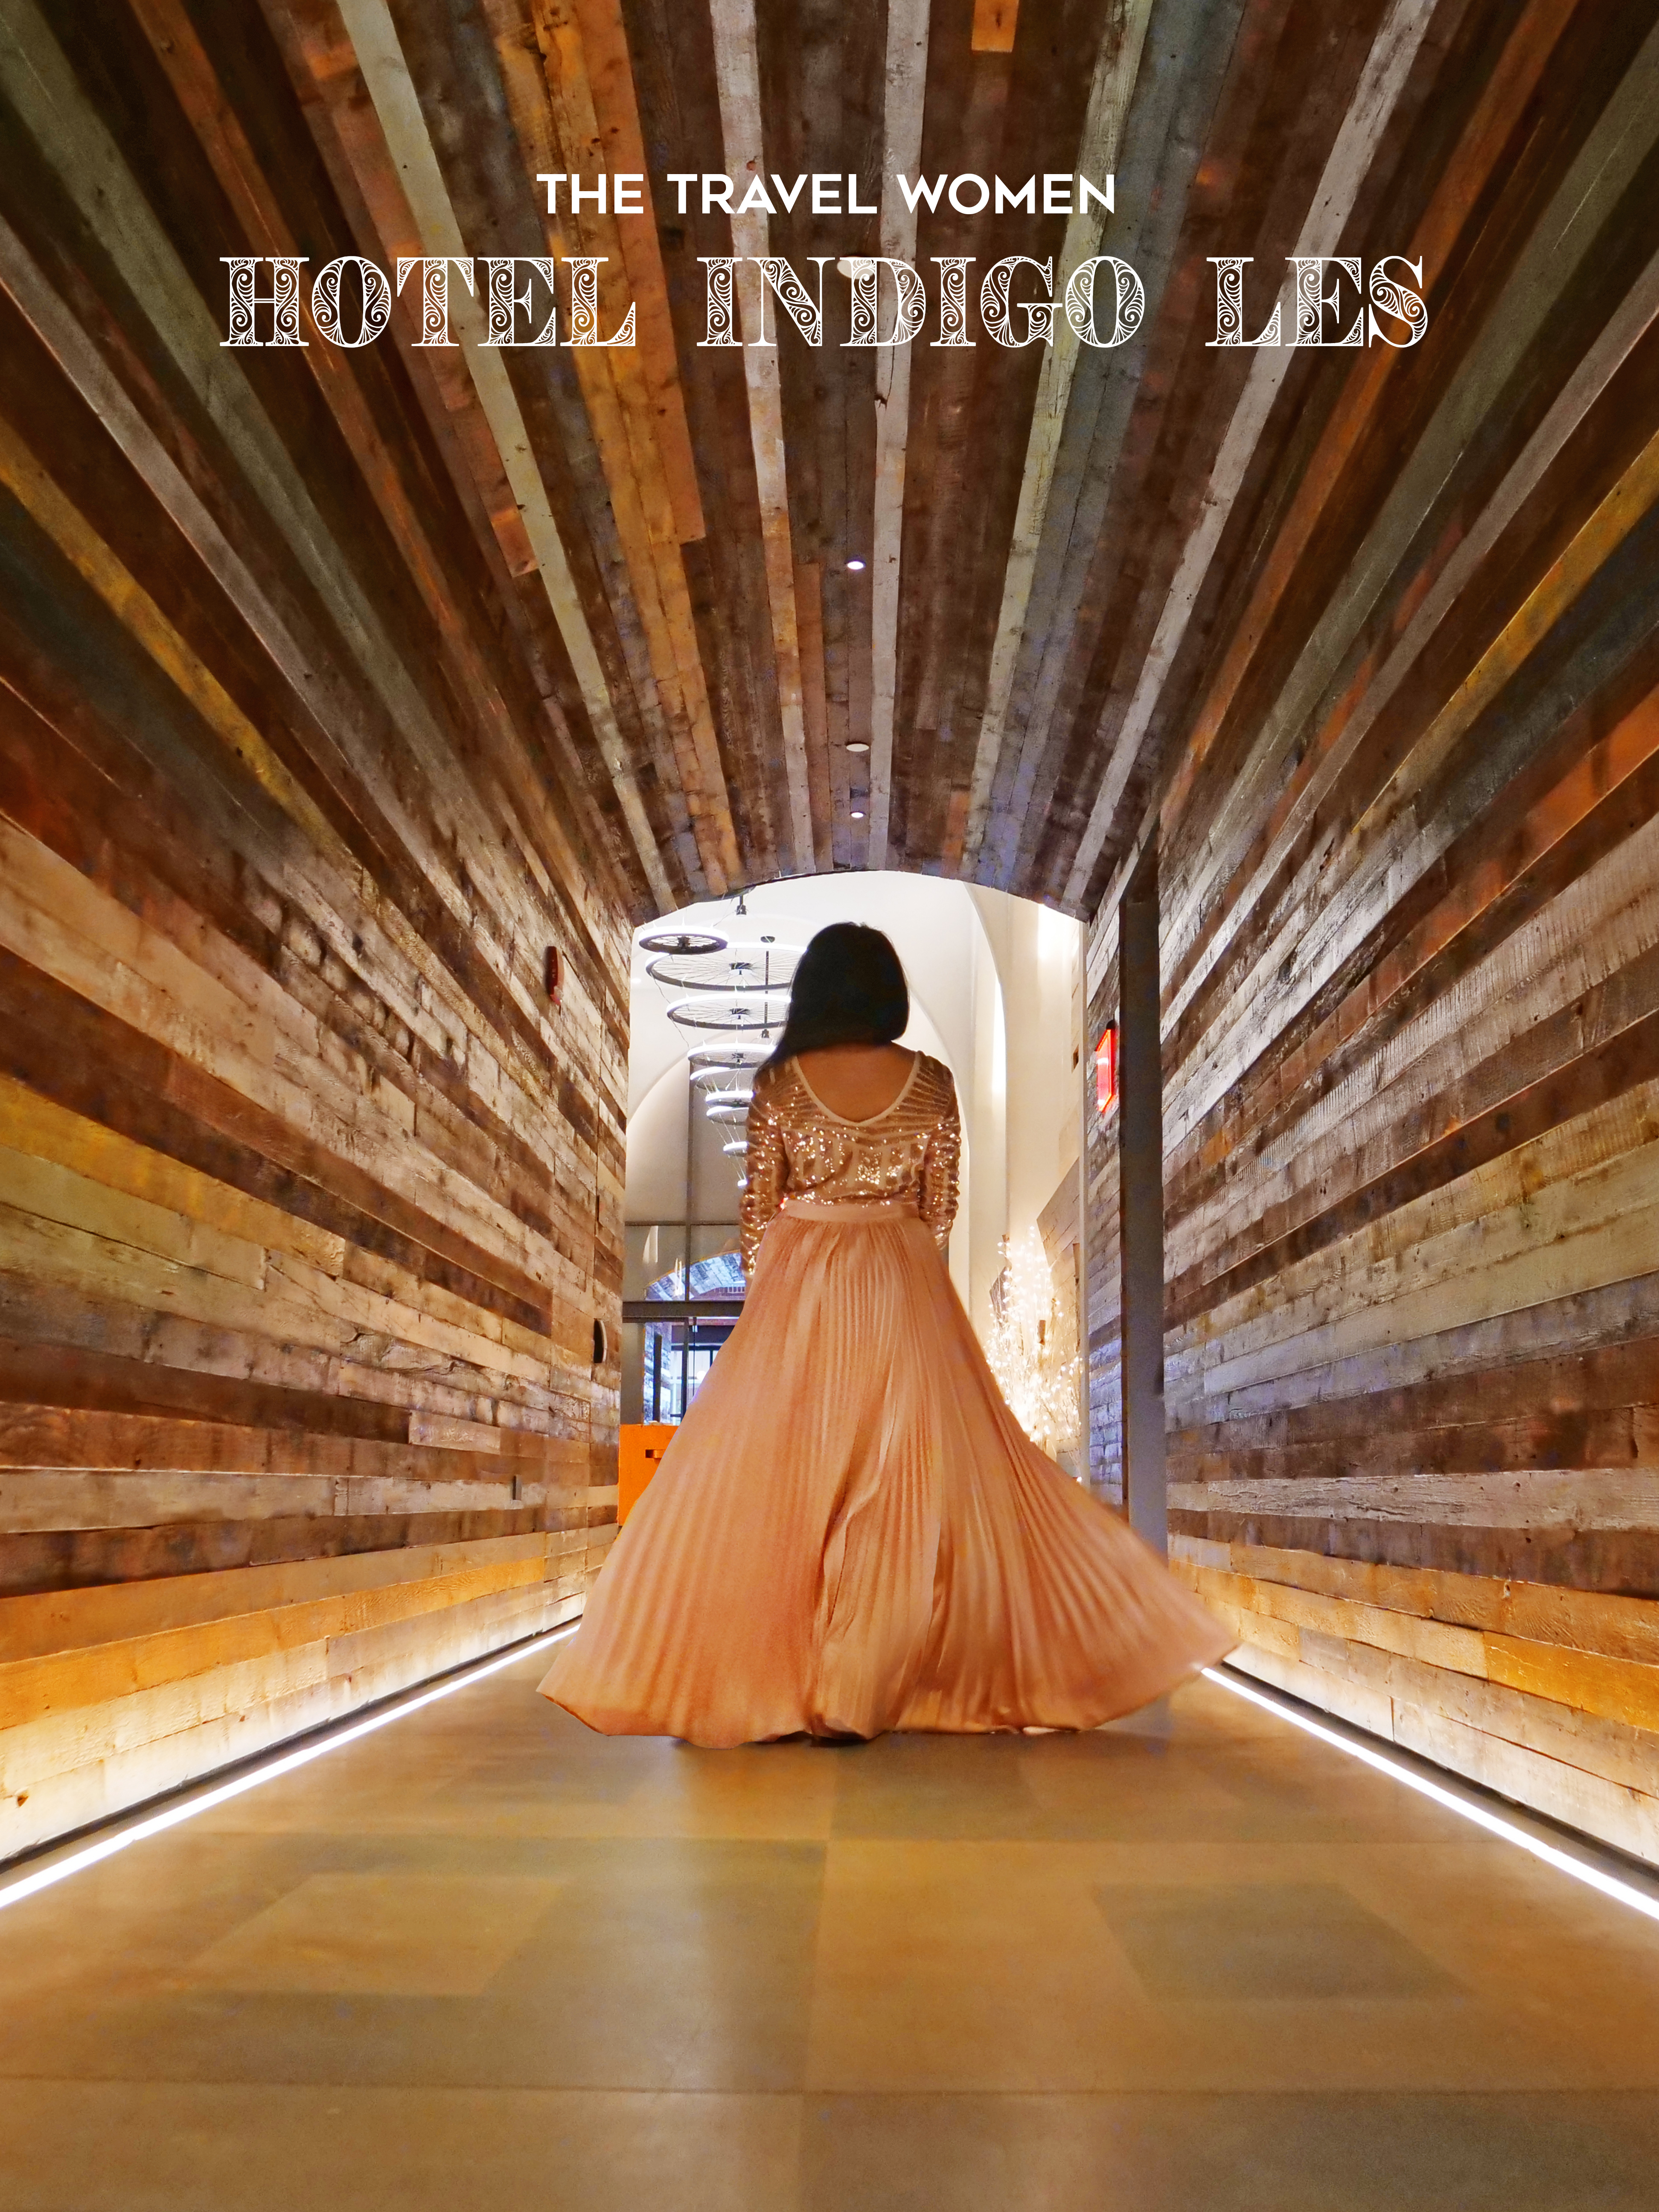 Hotel Indigo LES NYC hotel review The Travel Women lobby hallway